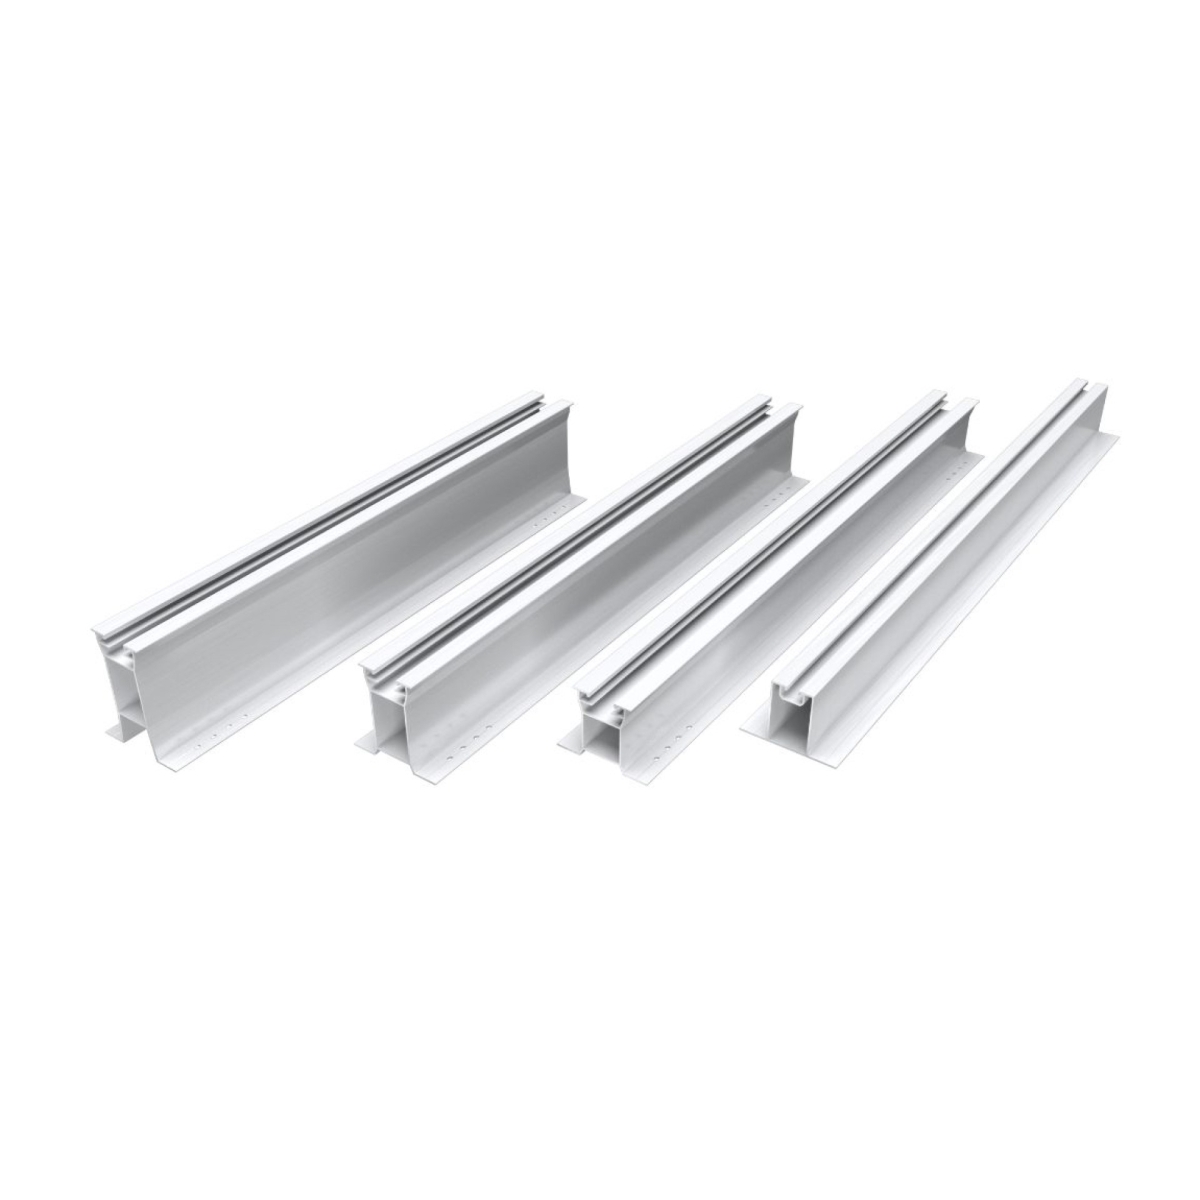 A175 Full Length Horizontal Profile Aluminum (80x55mm) 175 cm